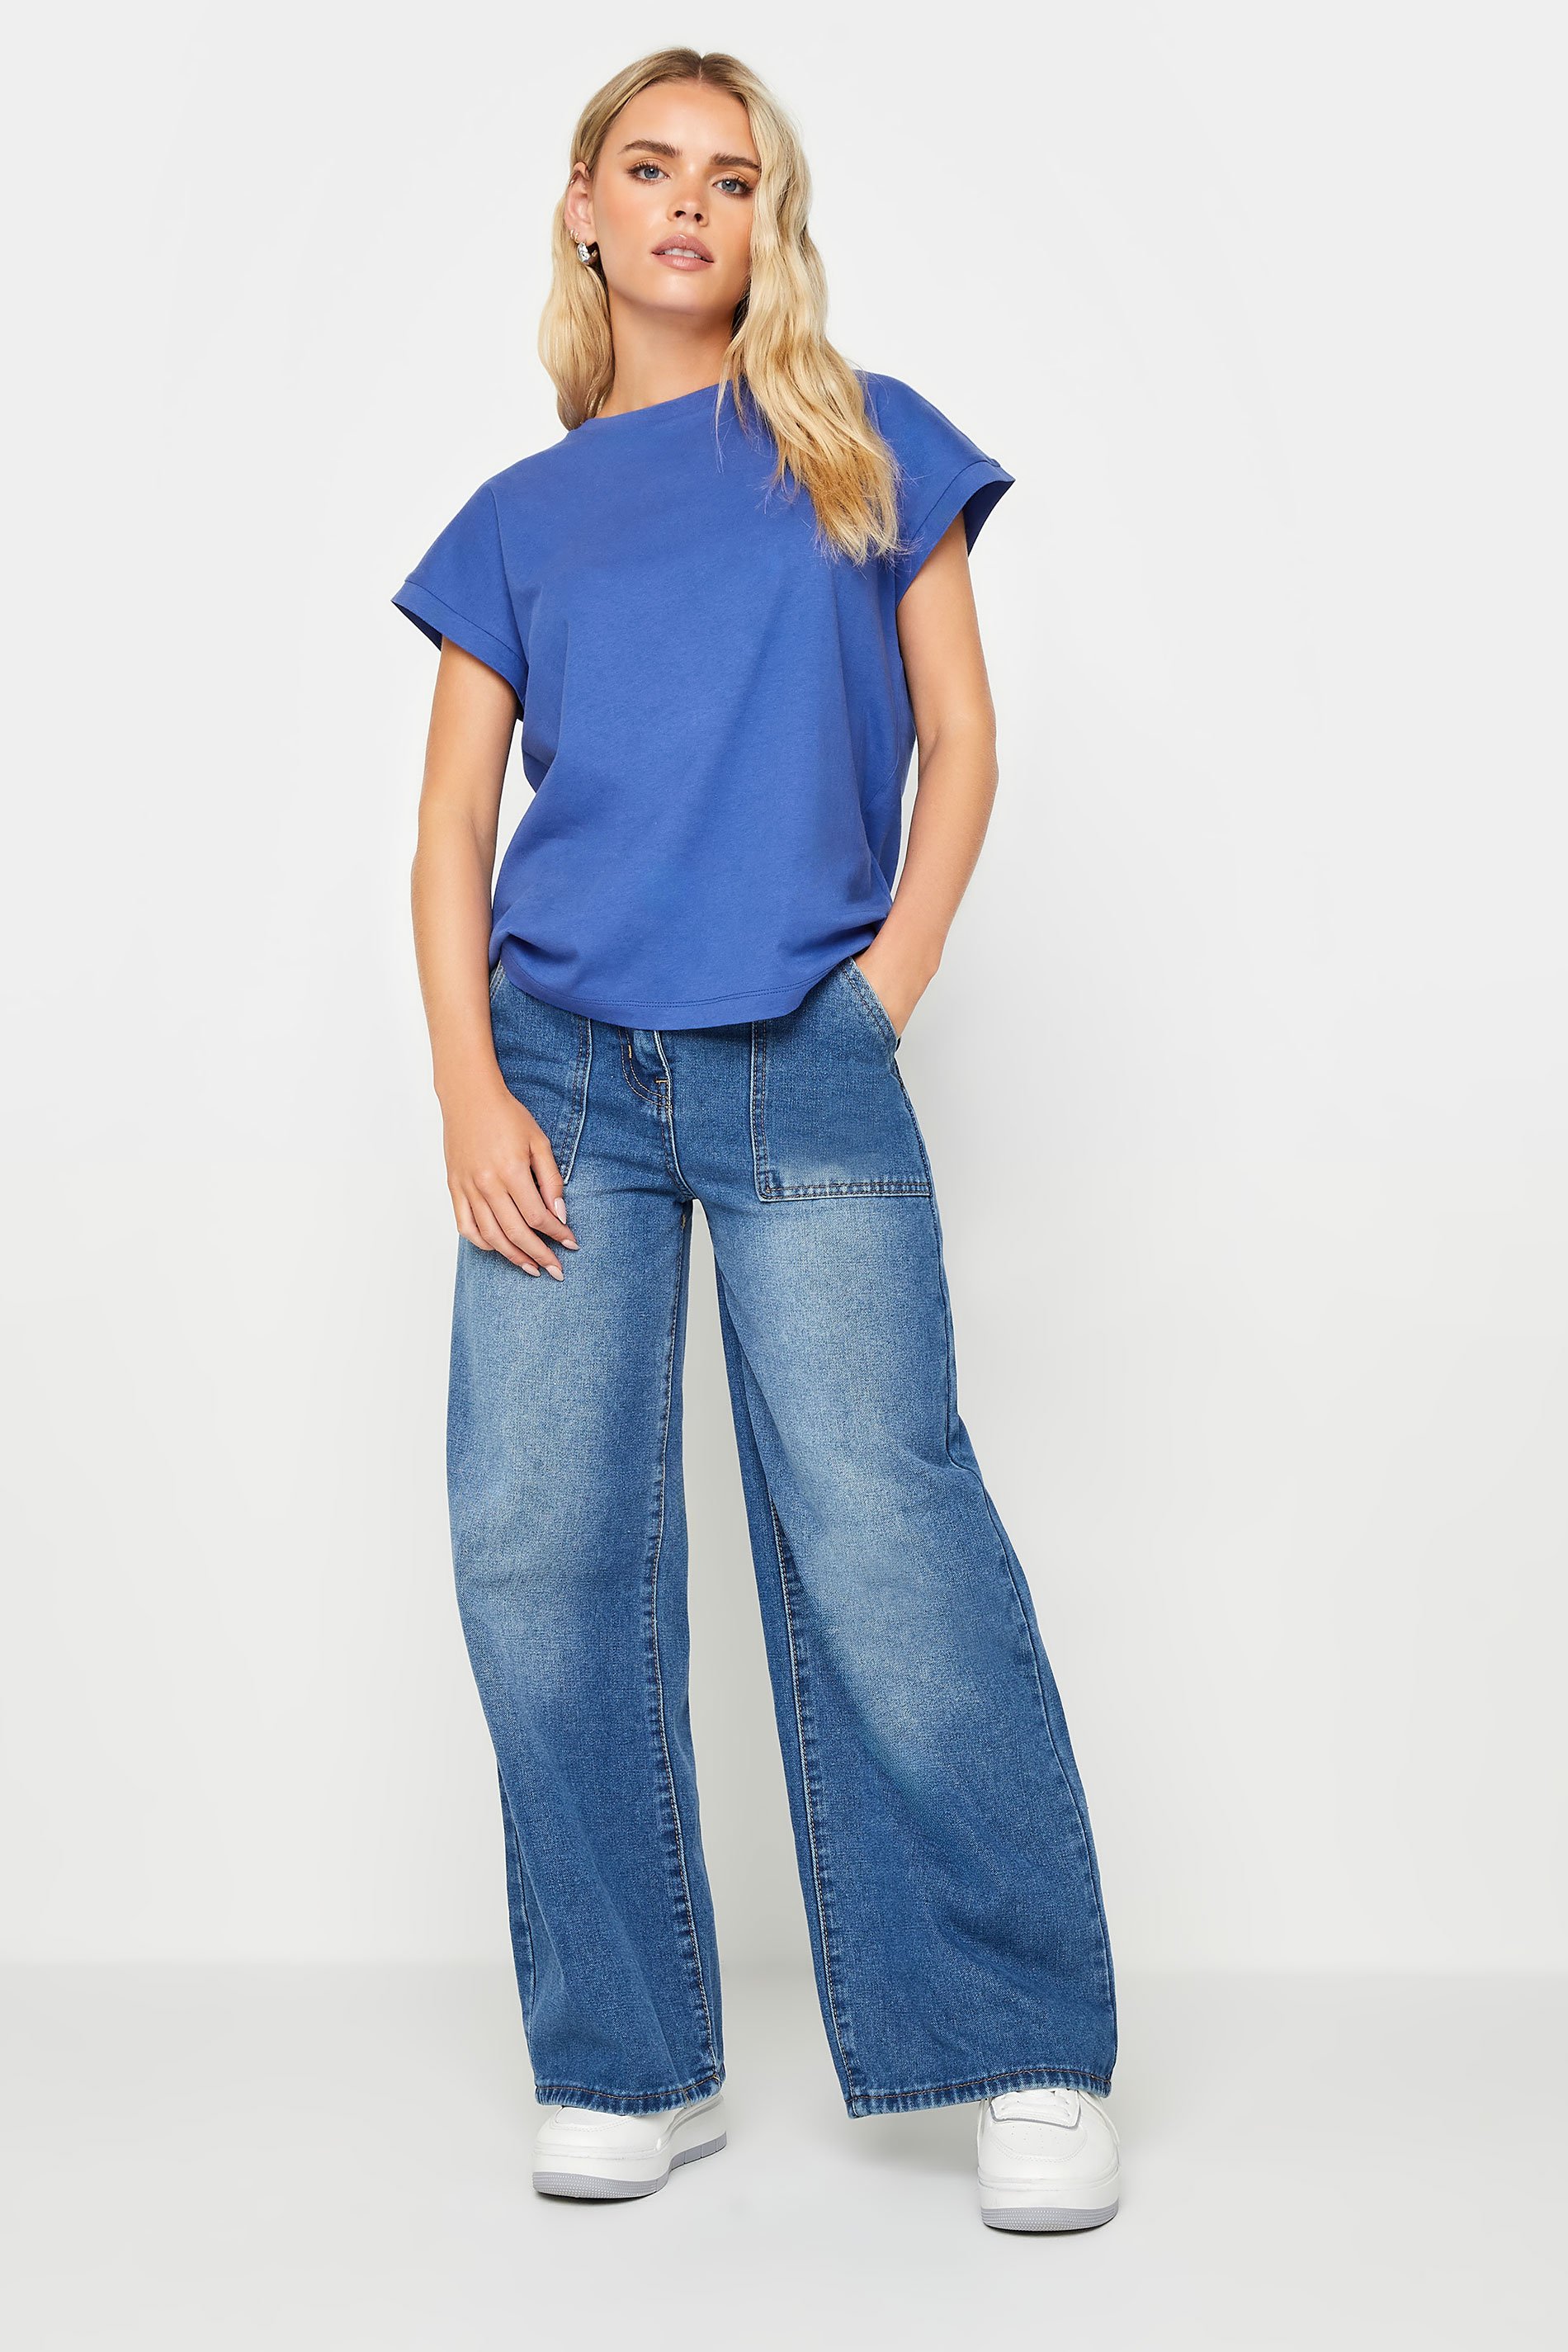 PixieGirl Petite Women's Blue Short Sleeve T-Shirt | PixieGirl 2